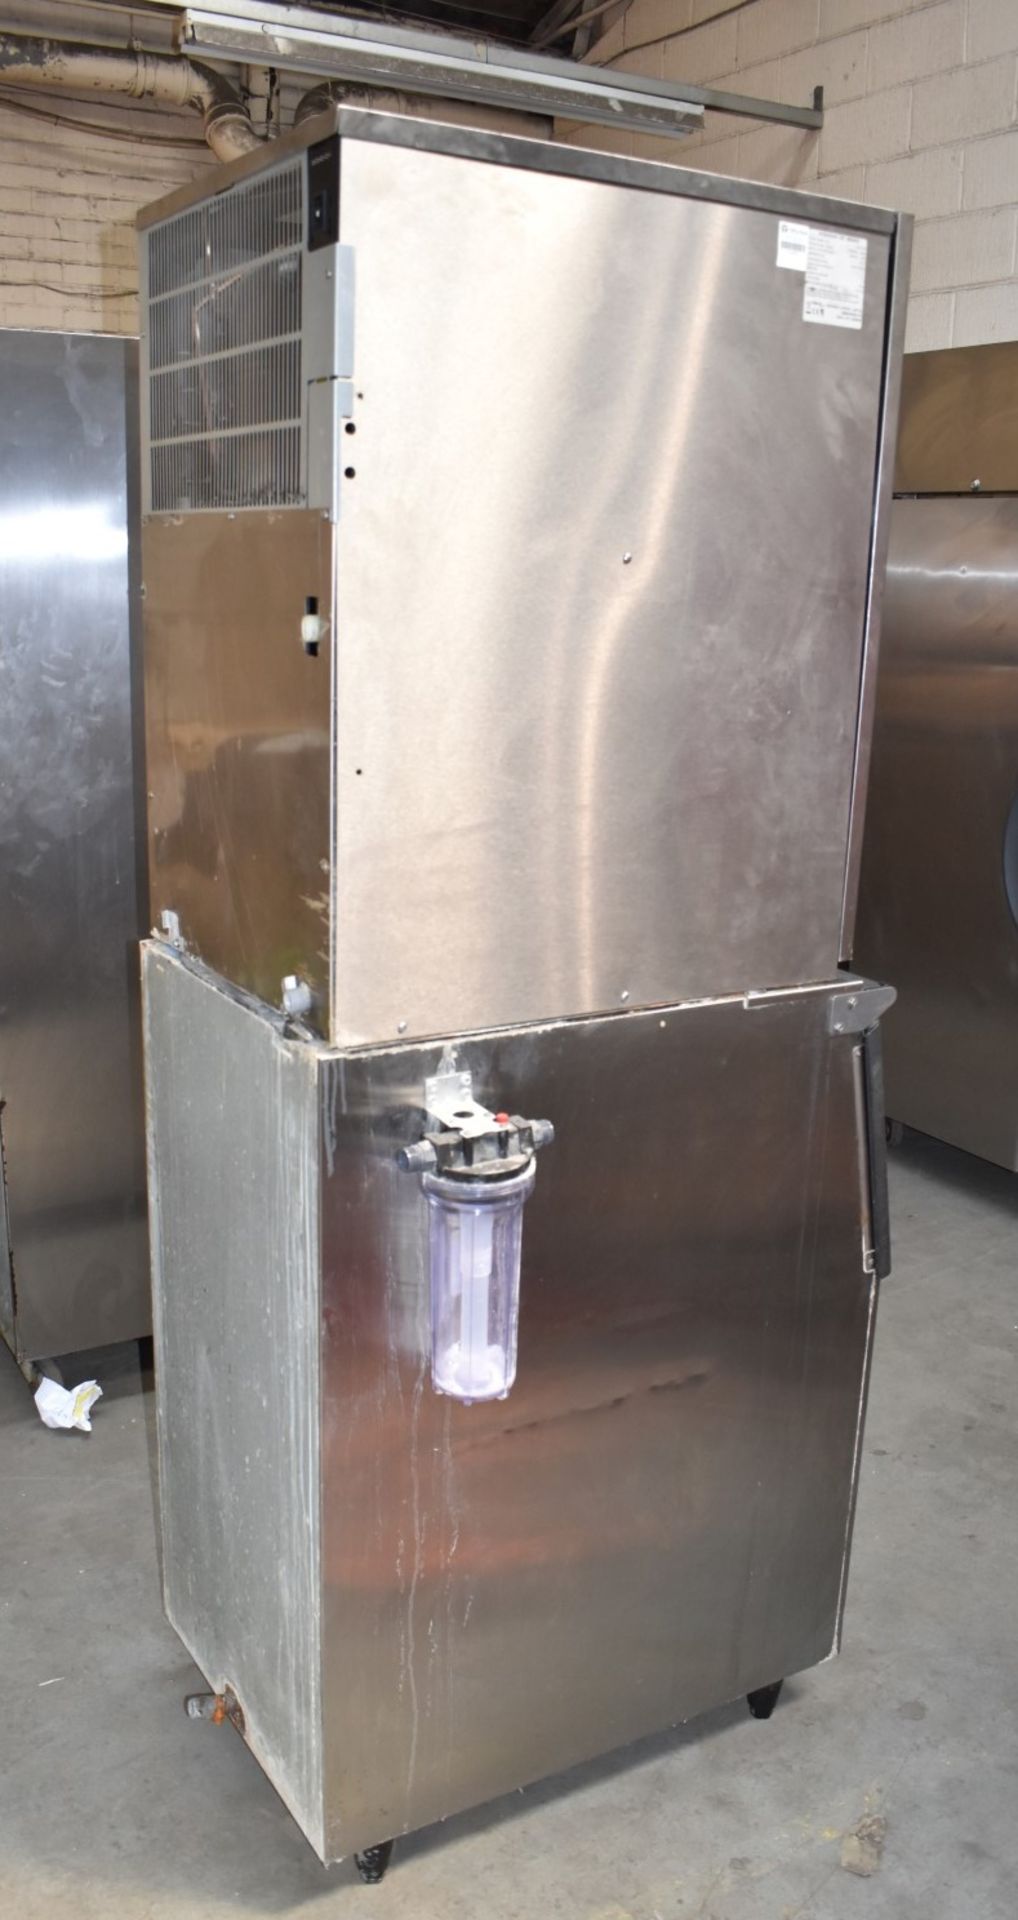 1 x Hoshizaki IM-240ANE Hydrocarbon Modular Ice Machine (210kg/24hr) With 140kg Capacity Storage Bin - Image 10 of 11